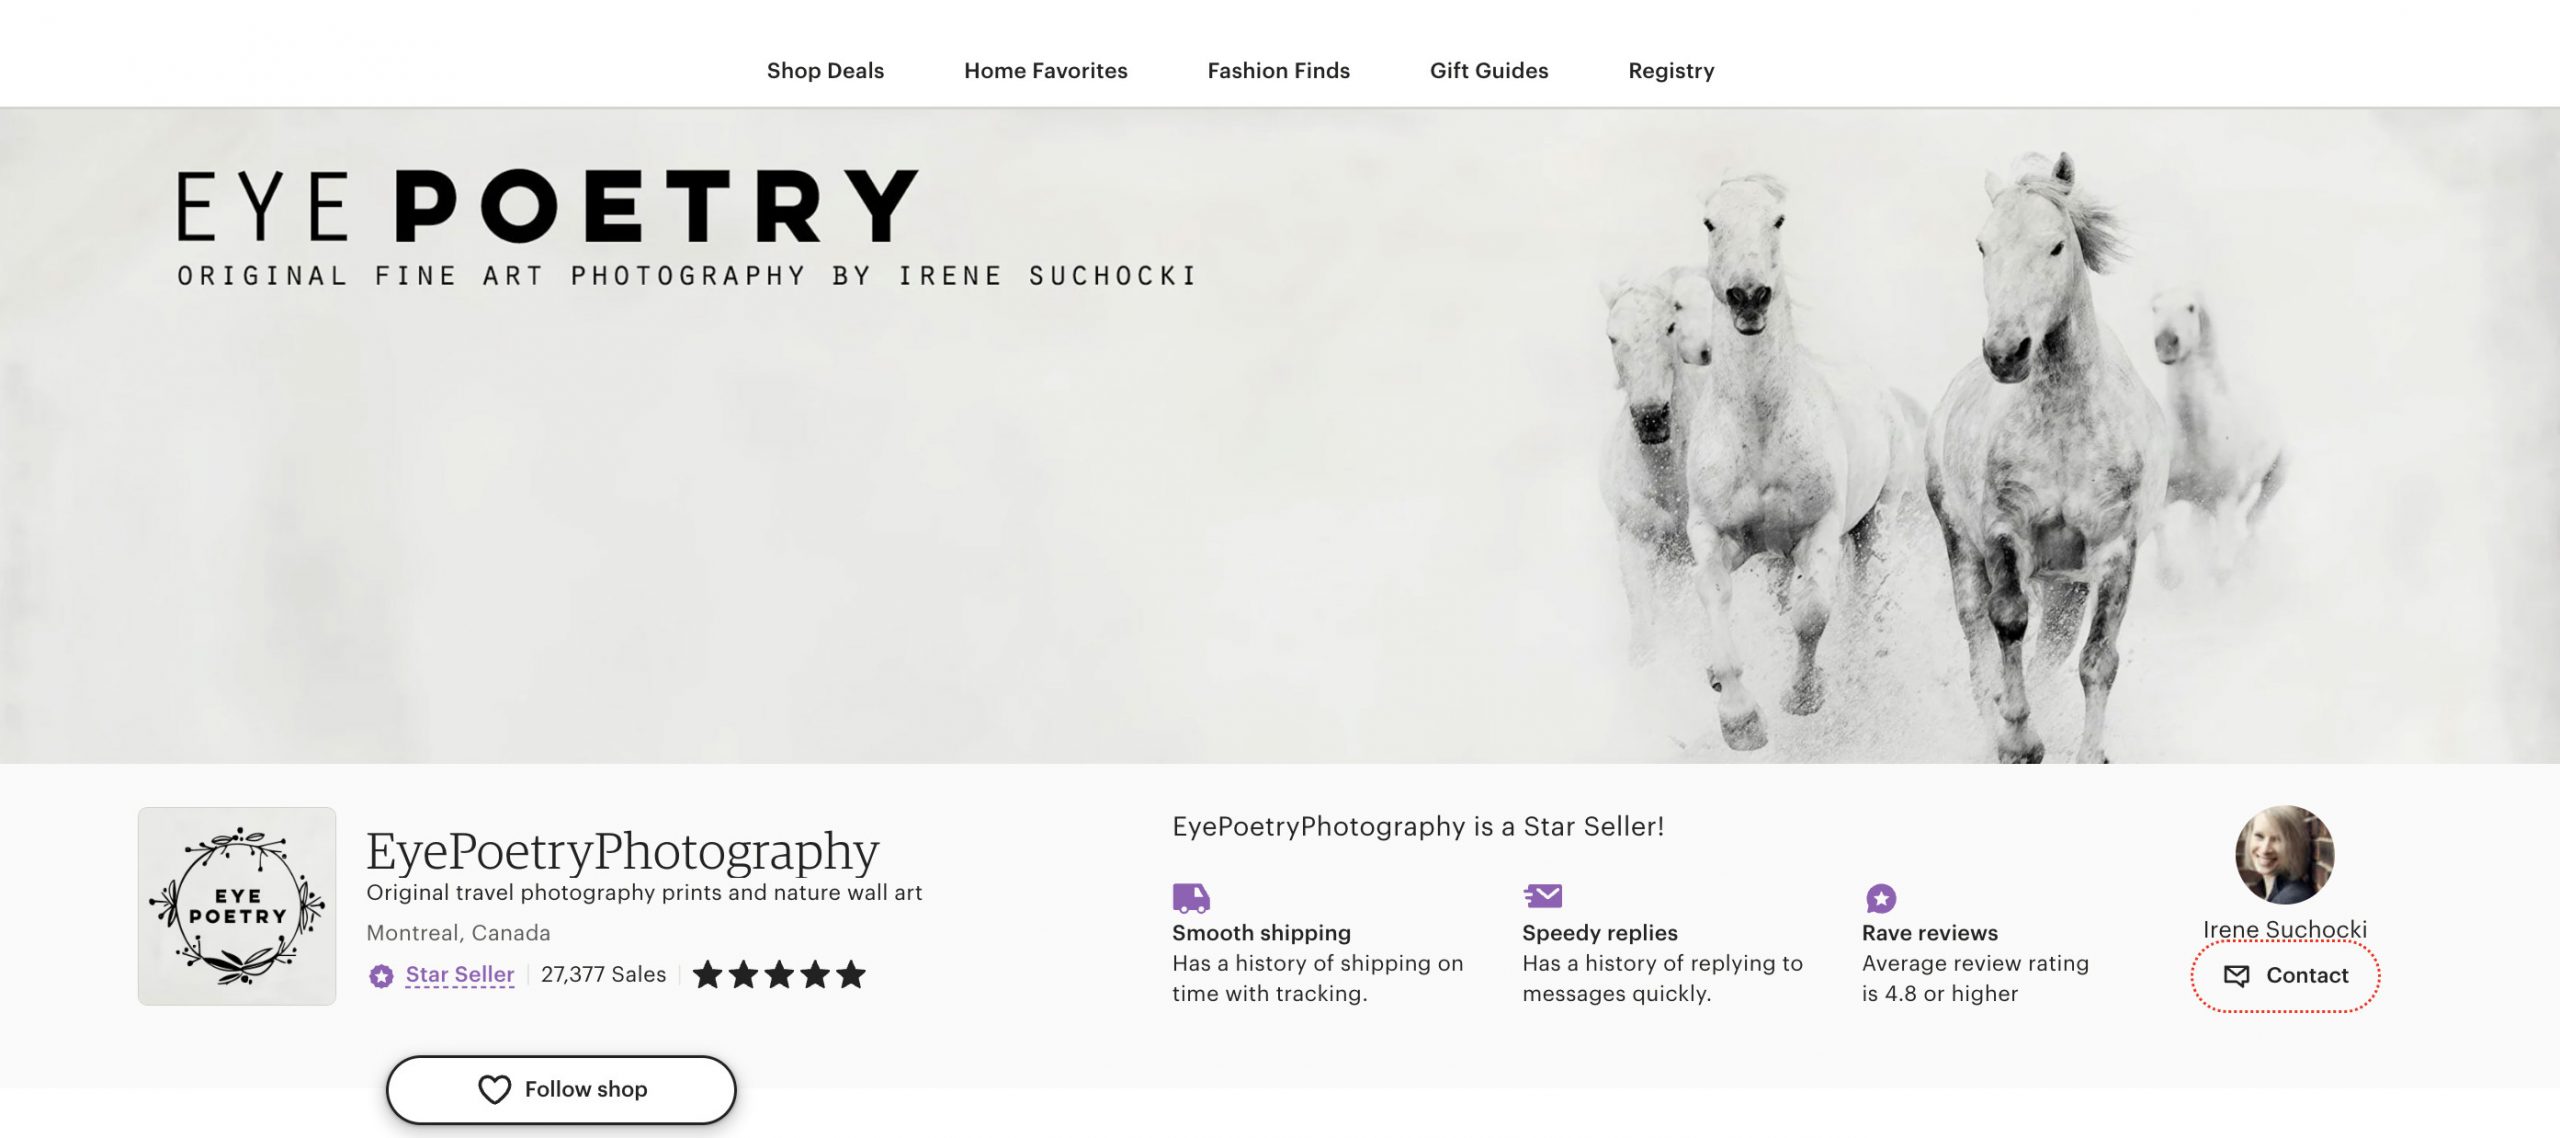 EyePoetry Photography etsy shop